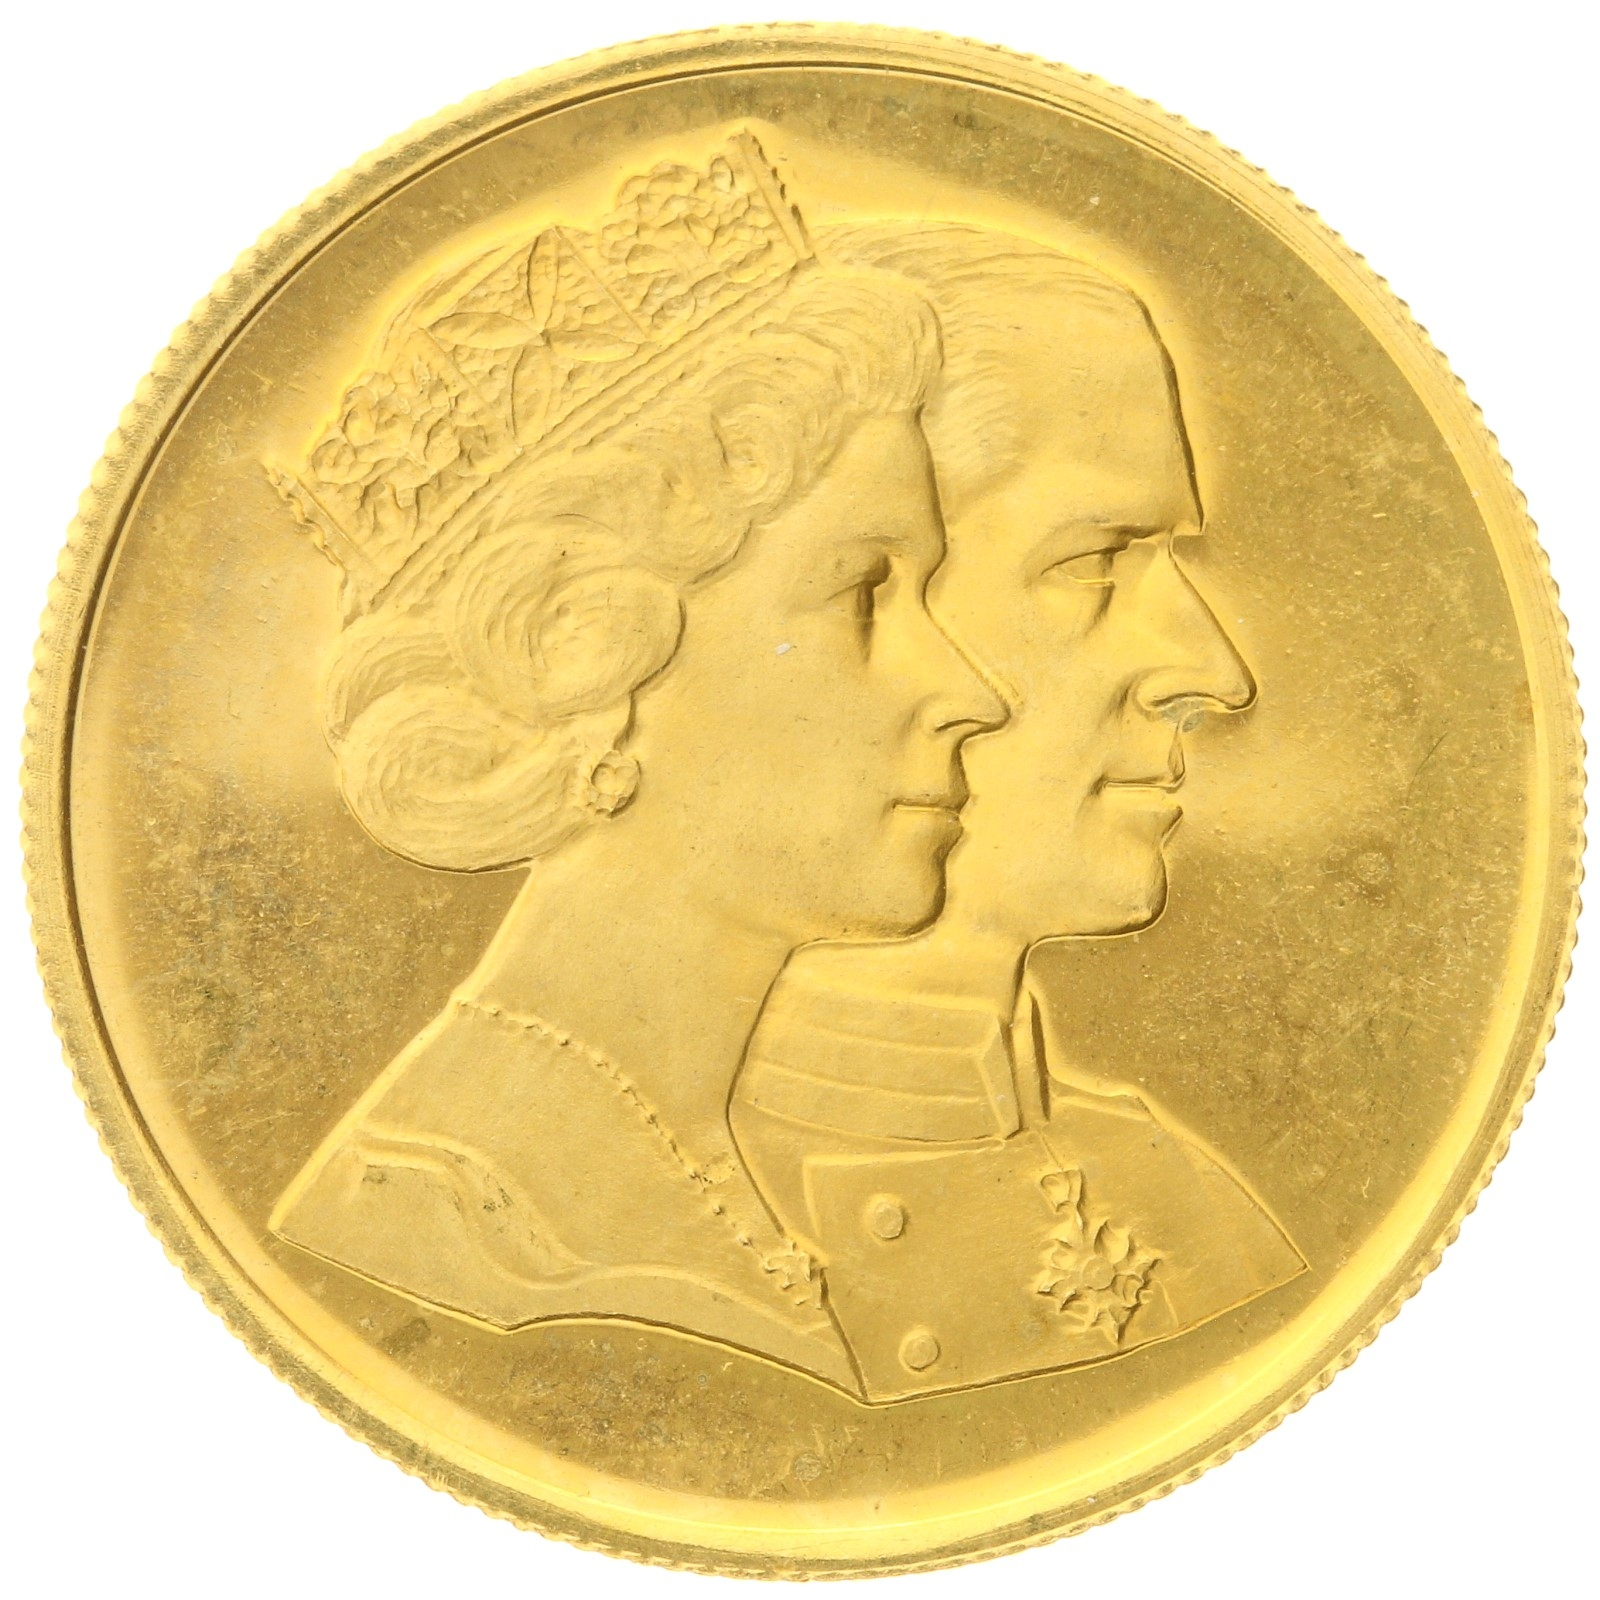 Denmark - Medal (1 ducat) - 1970s - Buckingham Palace